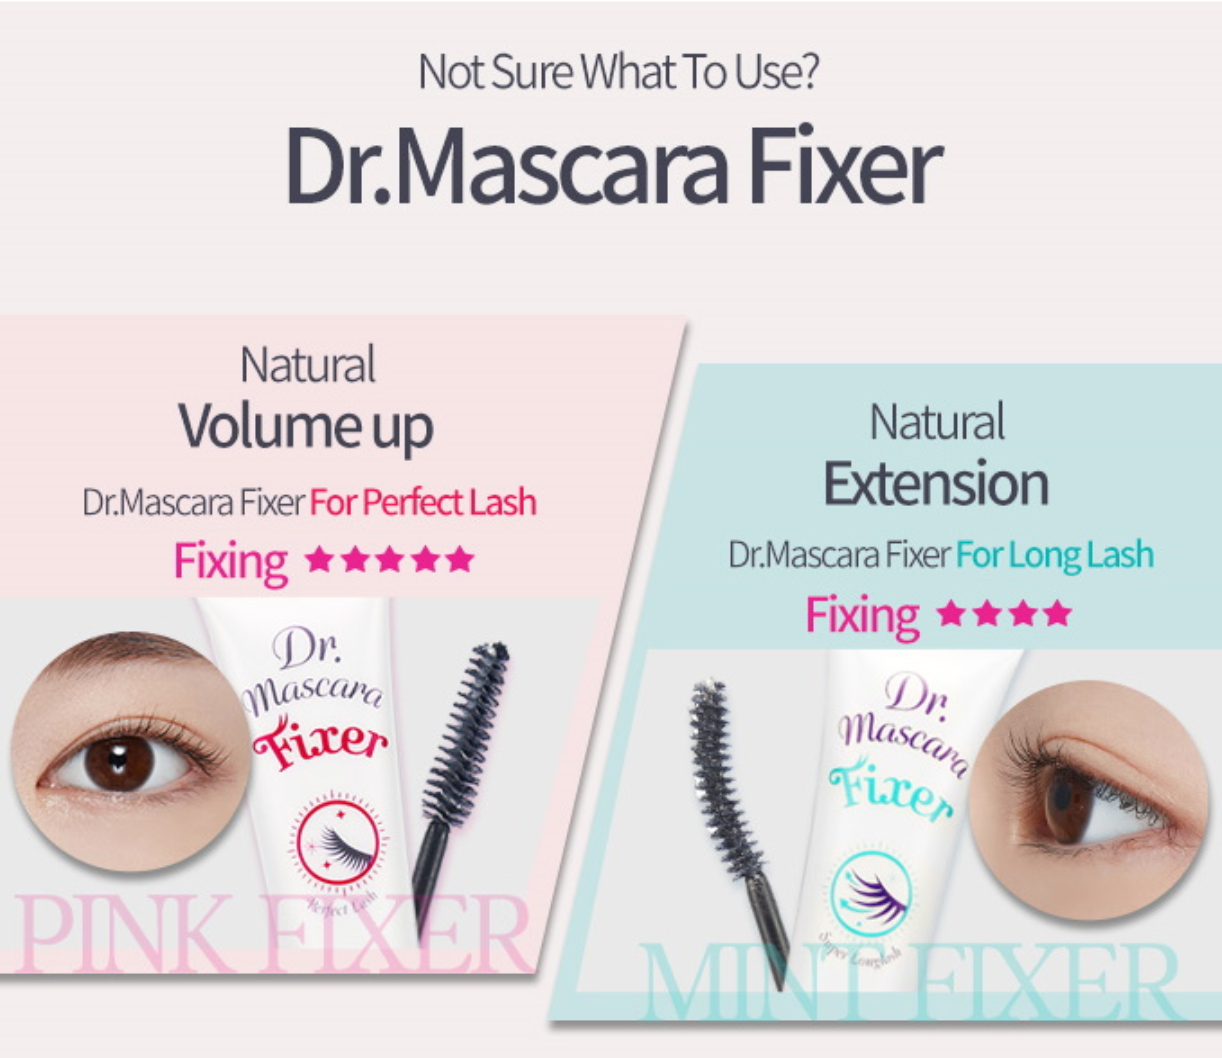 Etude - Dr. Mascara Fixer - 2 Types